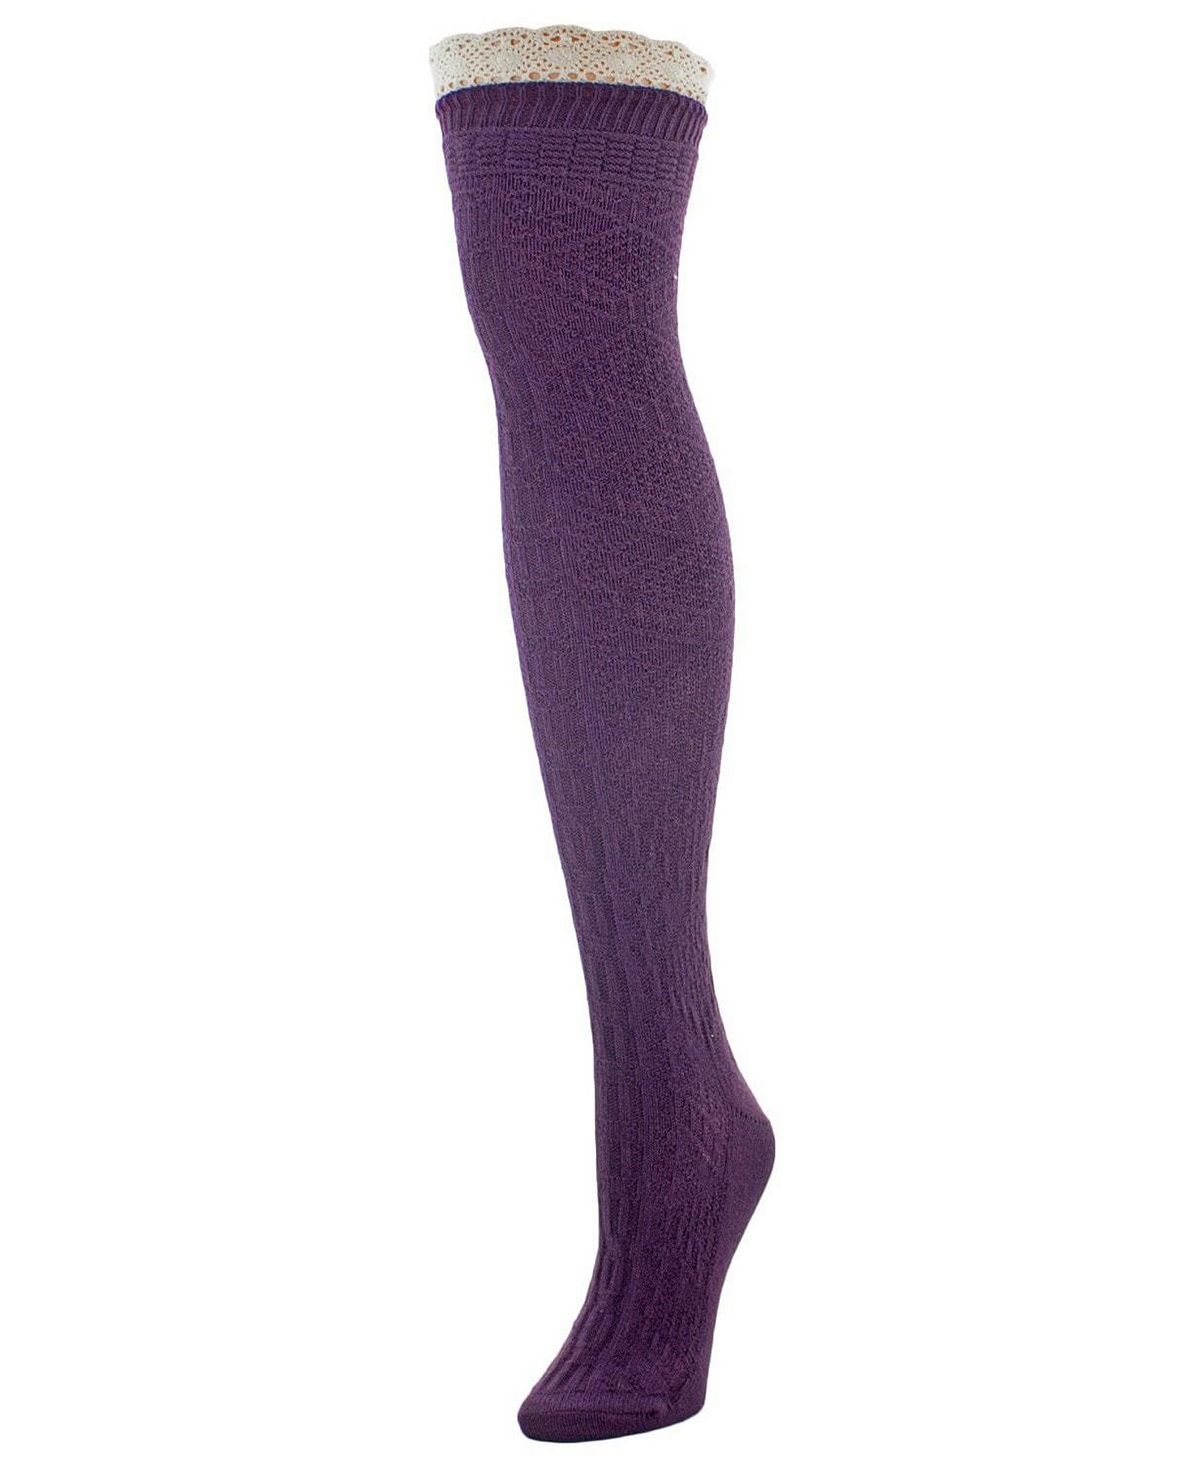 Женские носки выше колена крючком с ромбами MeMoi зимние ботинки balful zigzag цвет purple pennant